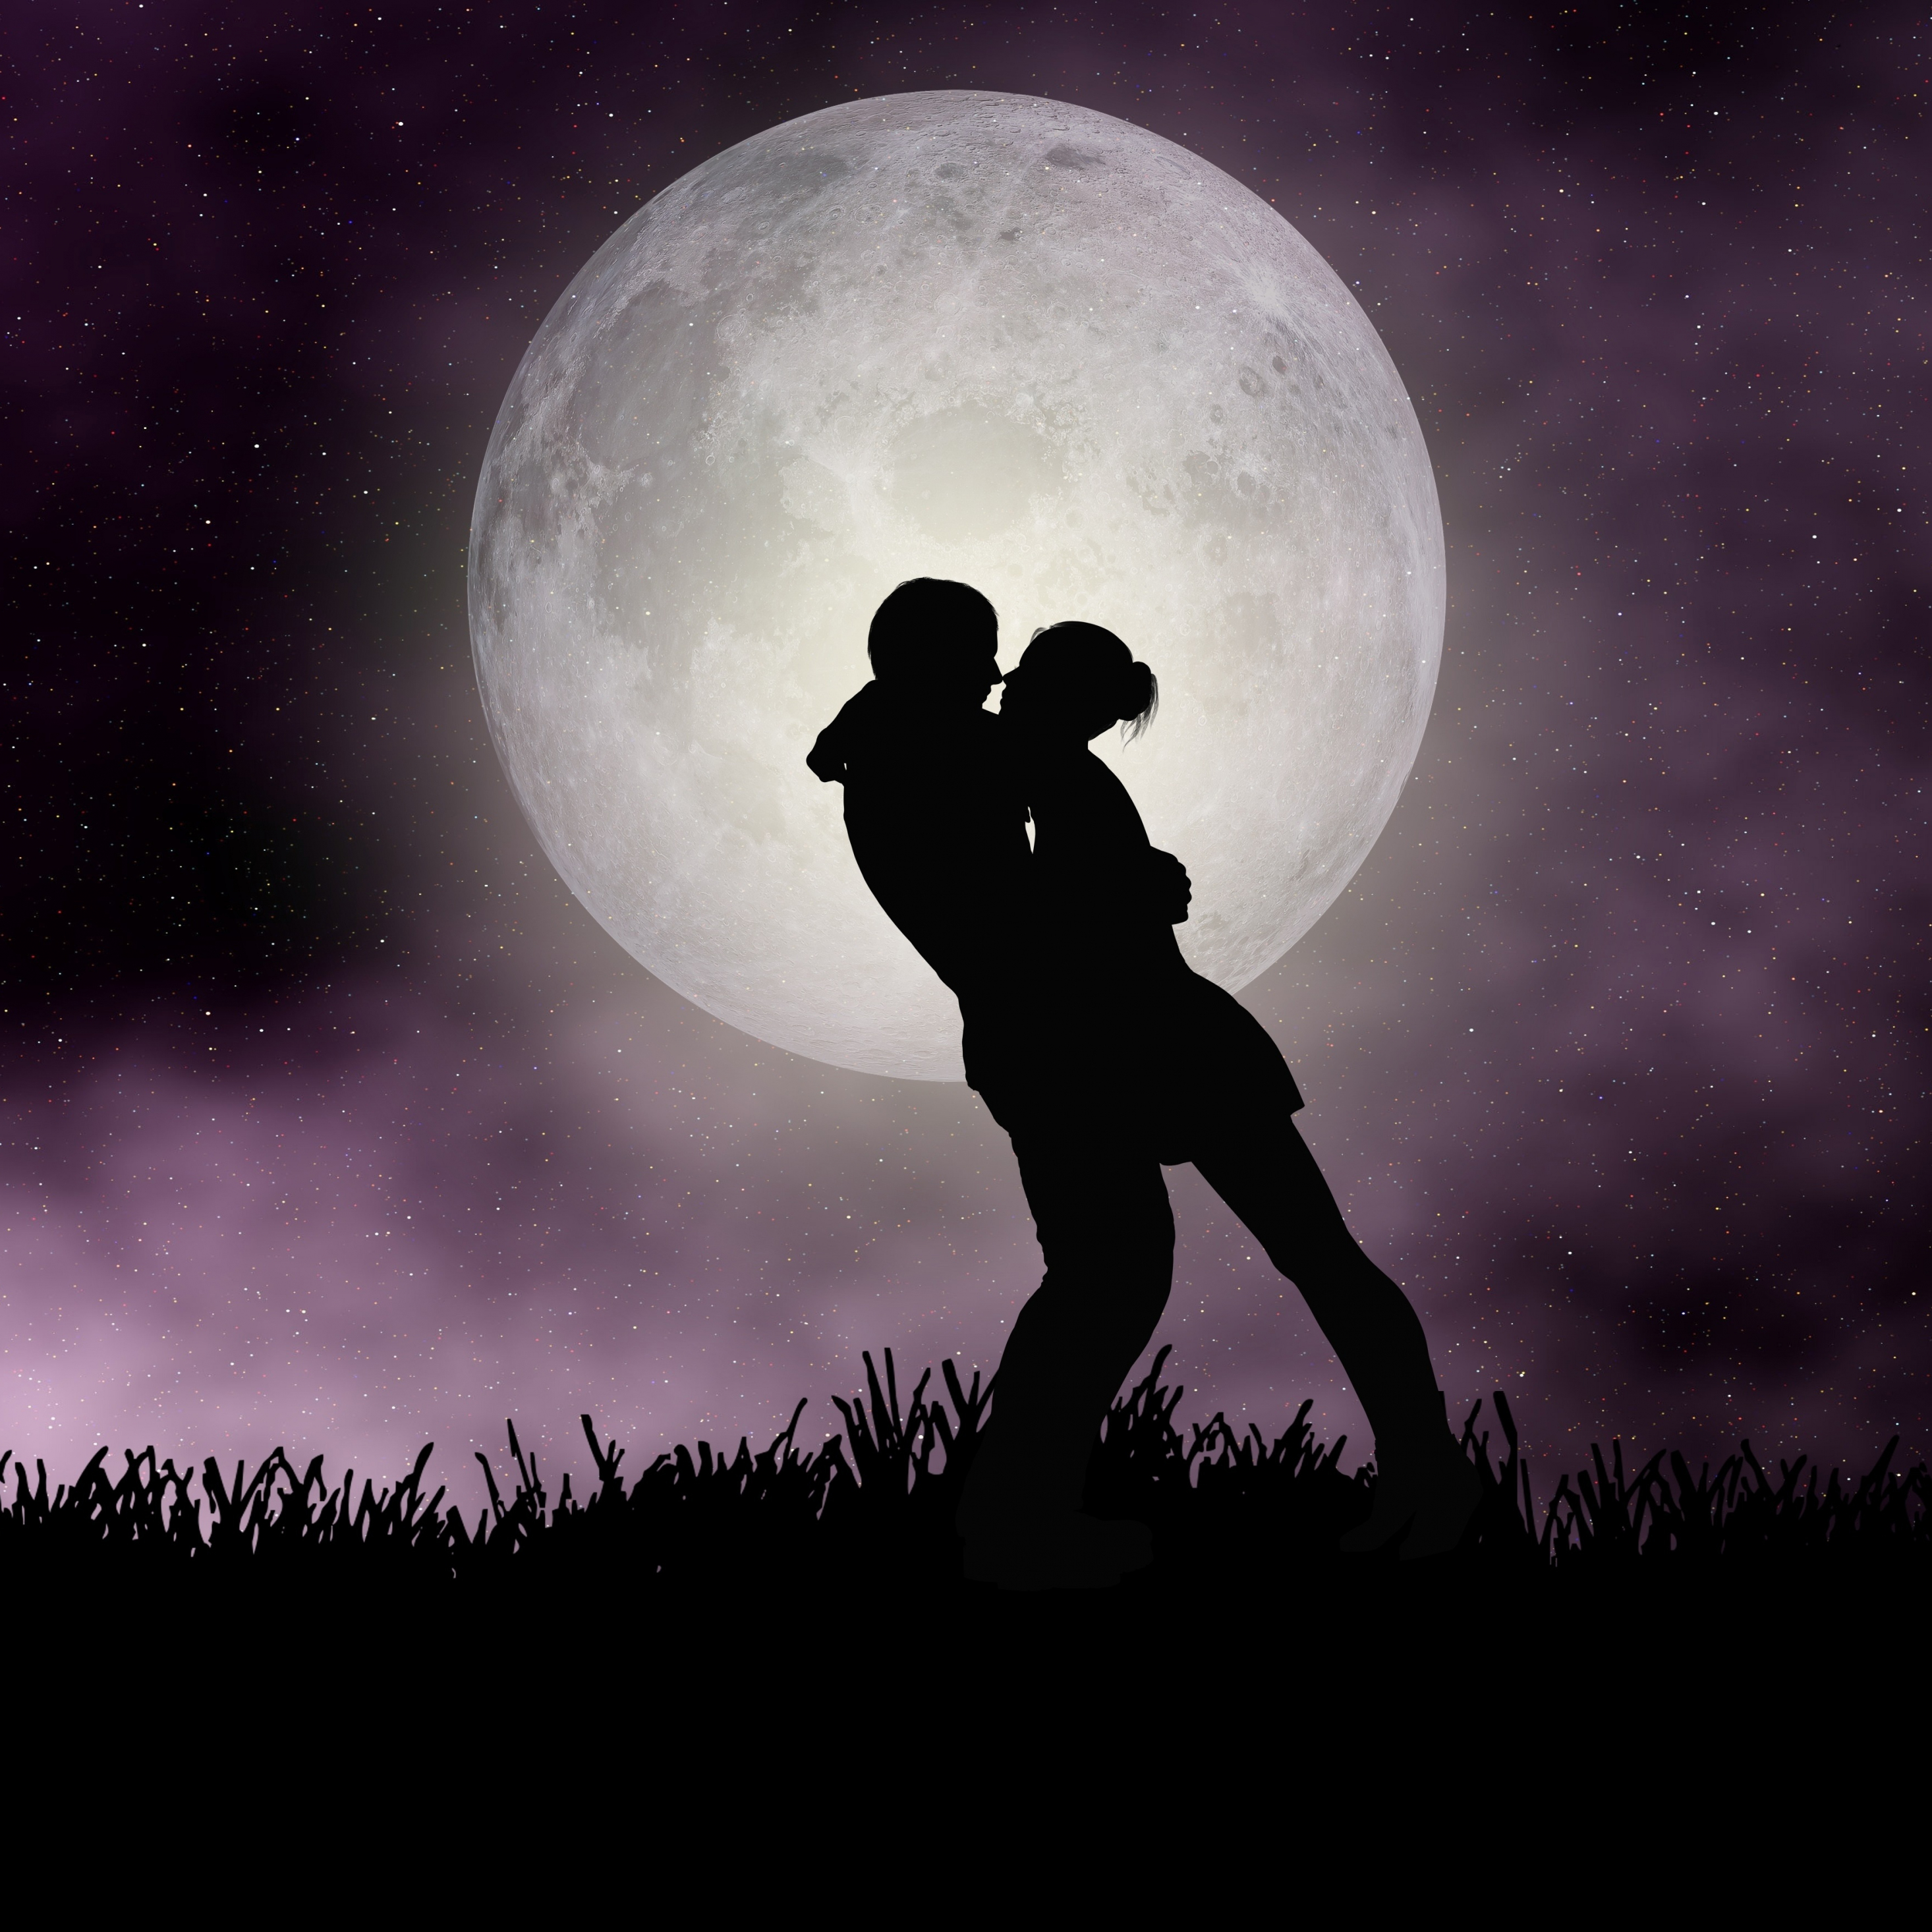 Download moon, romantic night, couple, silhouette, art 2932x2932 wallpaper, ipad pro retina, 2932x2932 image, background, 19759